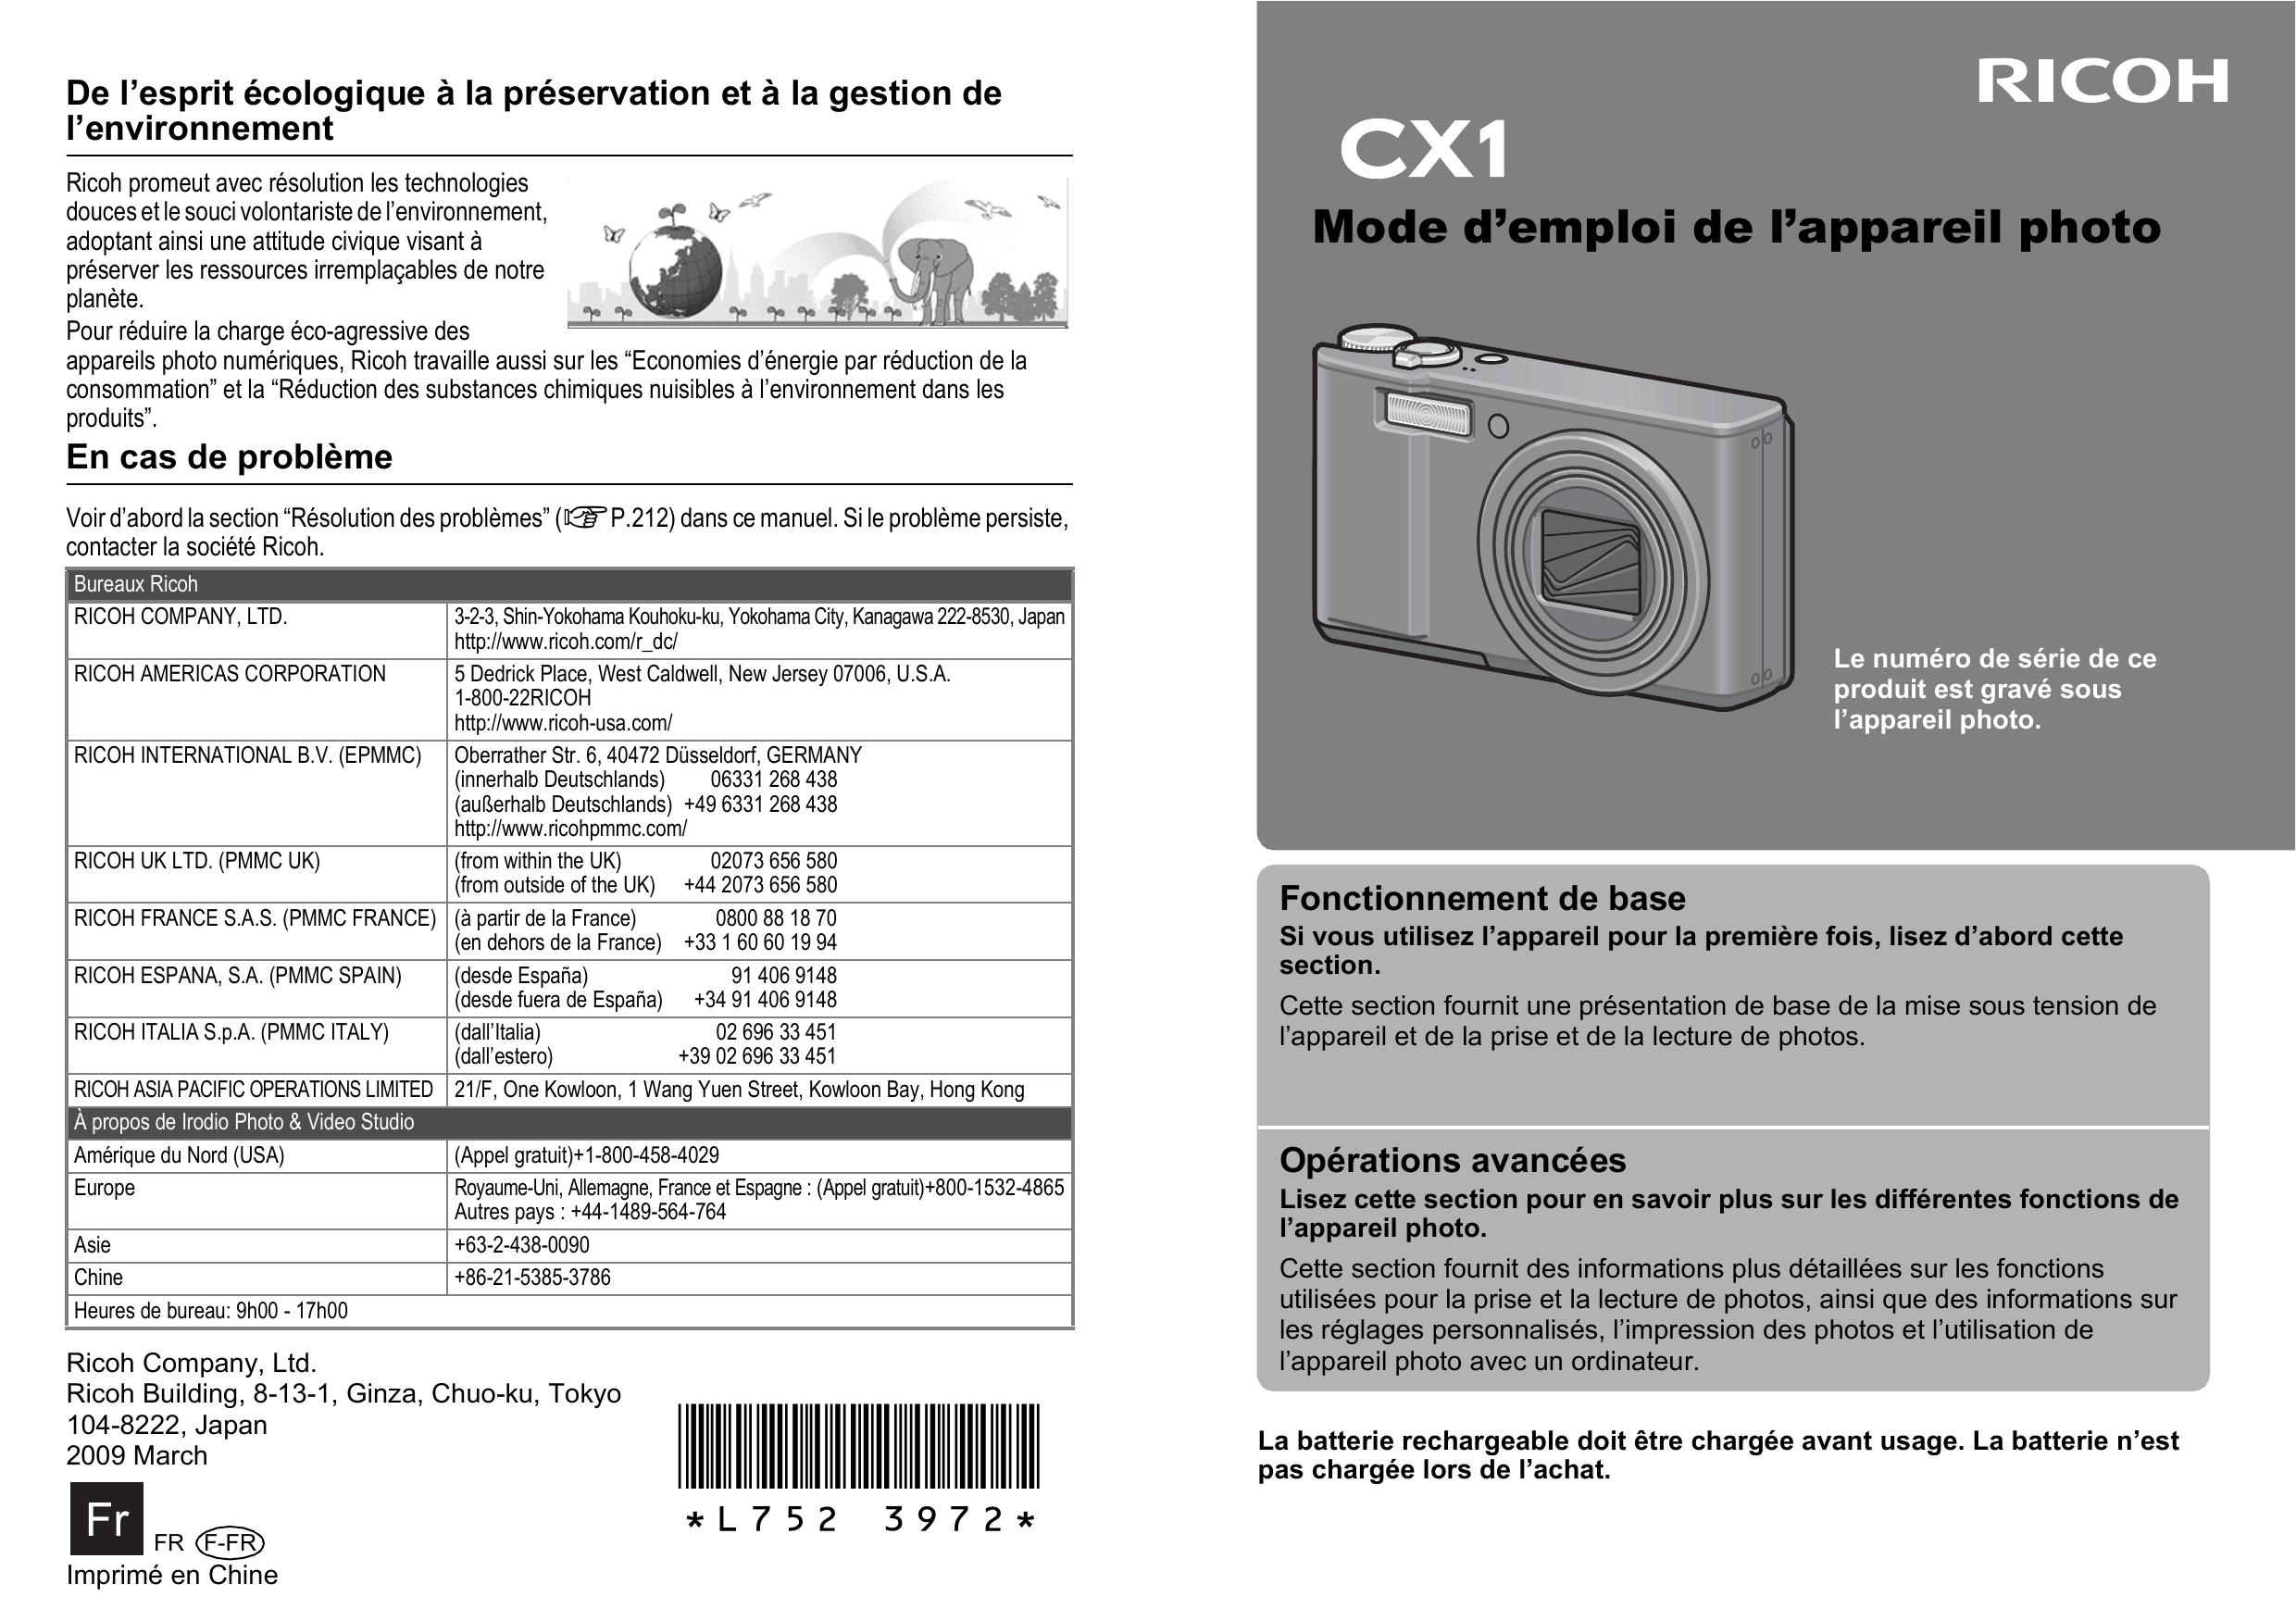 Ricoh CX1 Digital Camera User Manual